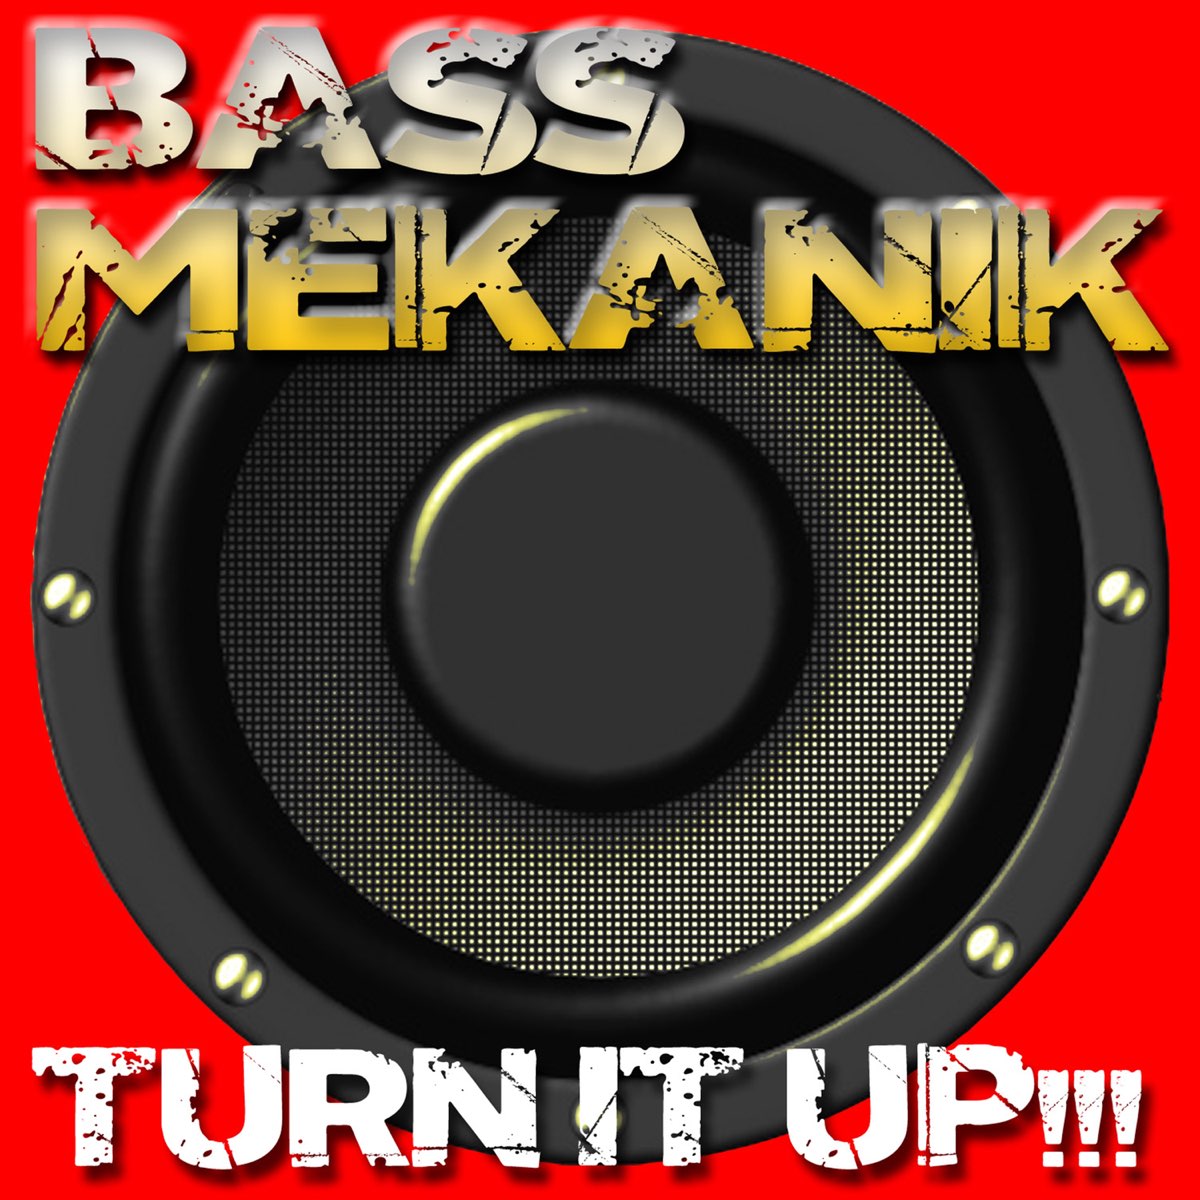 Turn my music. Bass альбом. Bass Mekanik как выглядит. Альбом для Басов. Bass Mekanik 2015 Power.